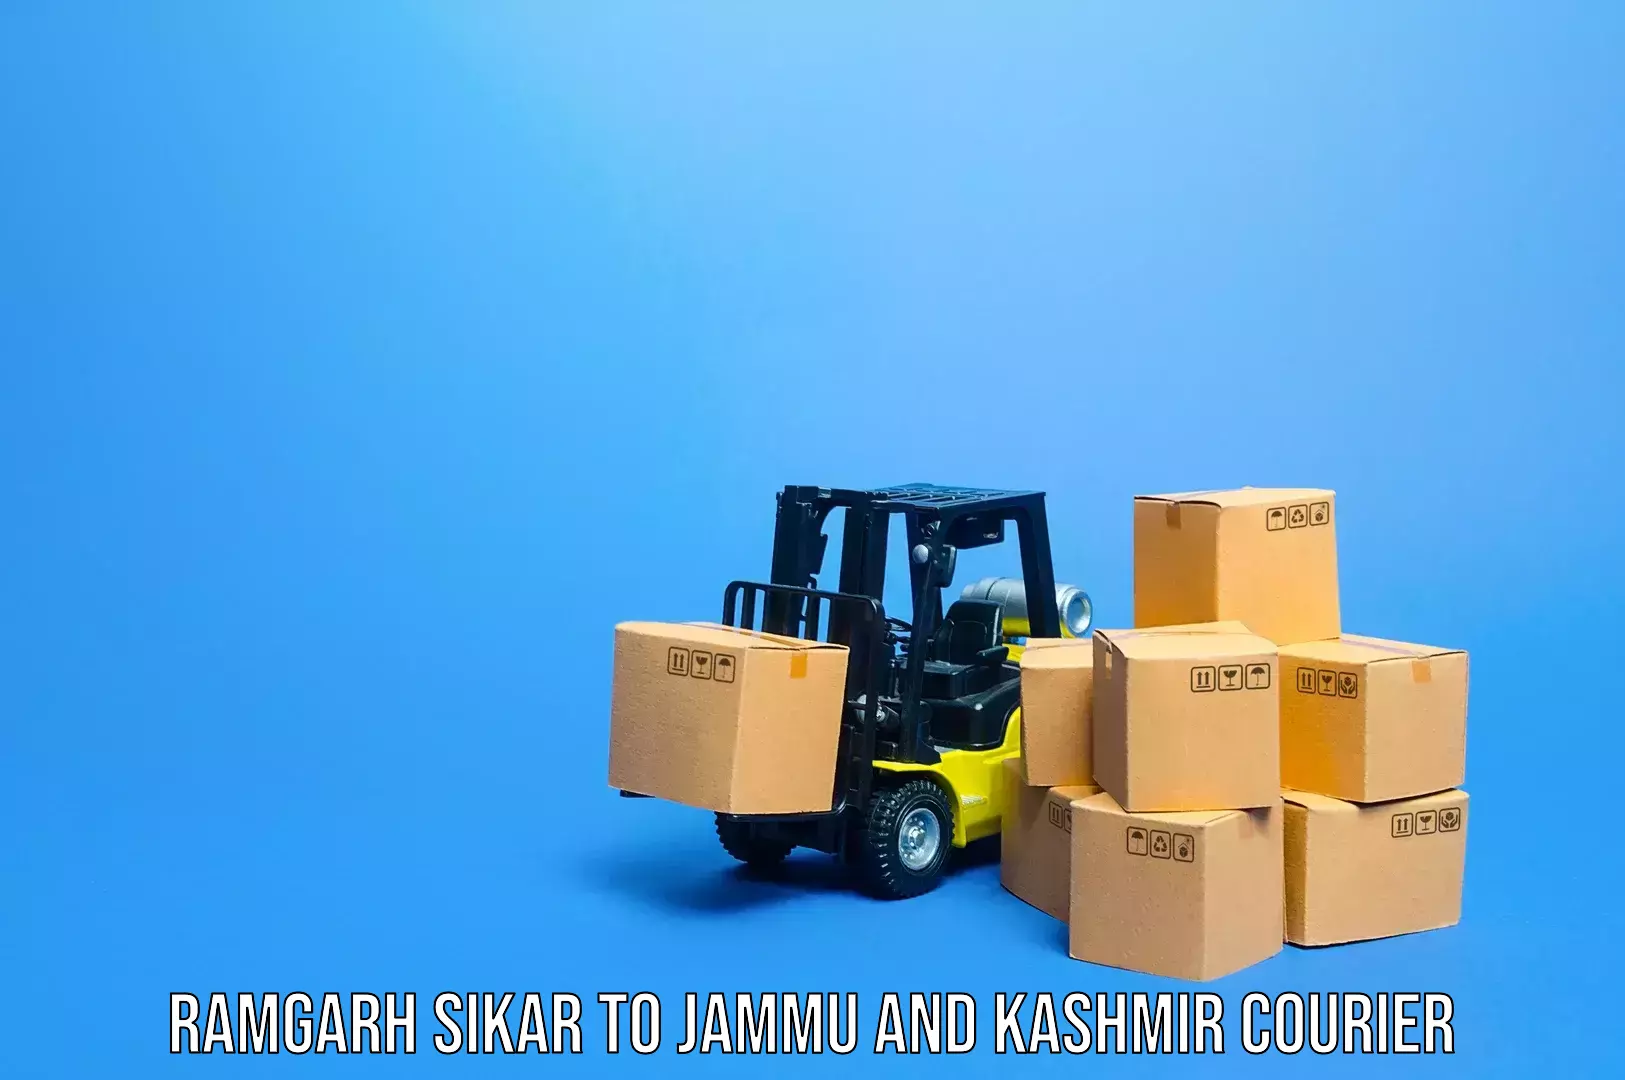 Baggage transport network Ramgarh Sikar to Jammu and Kashmir